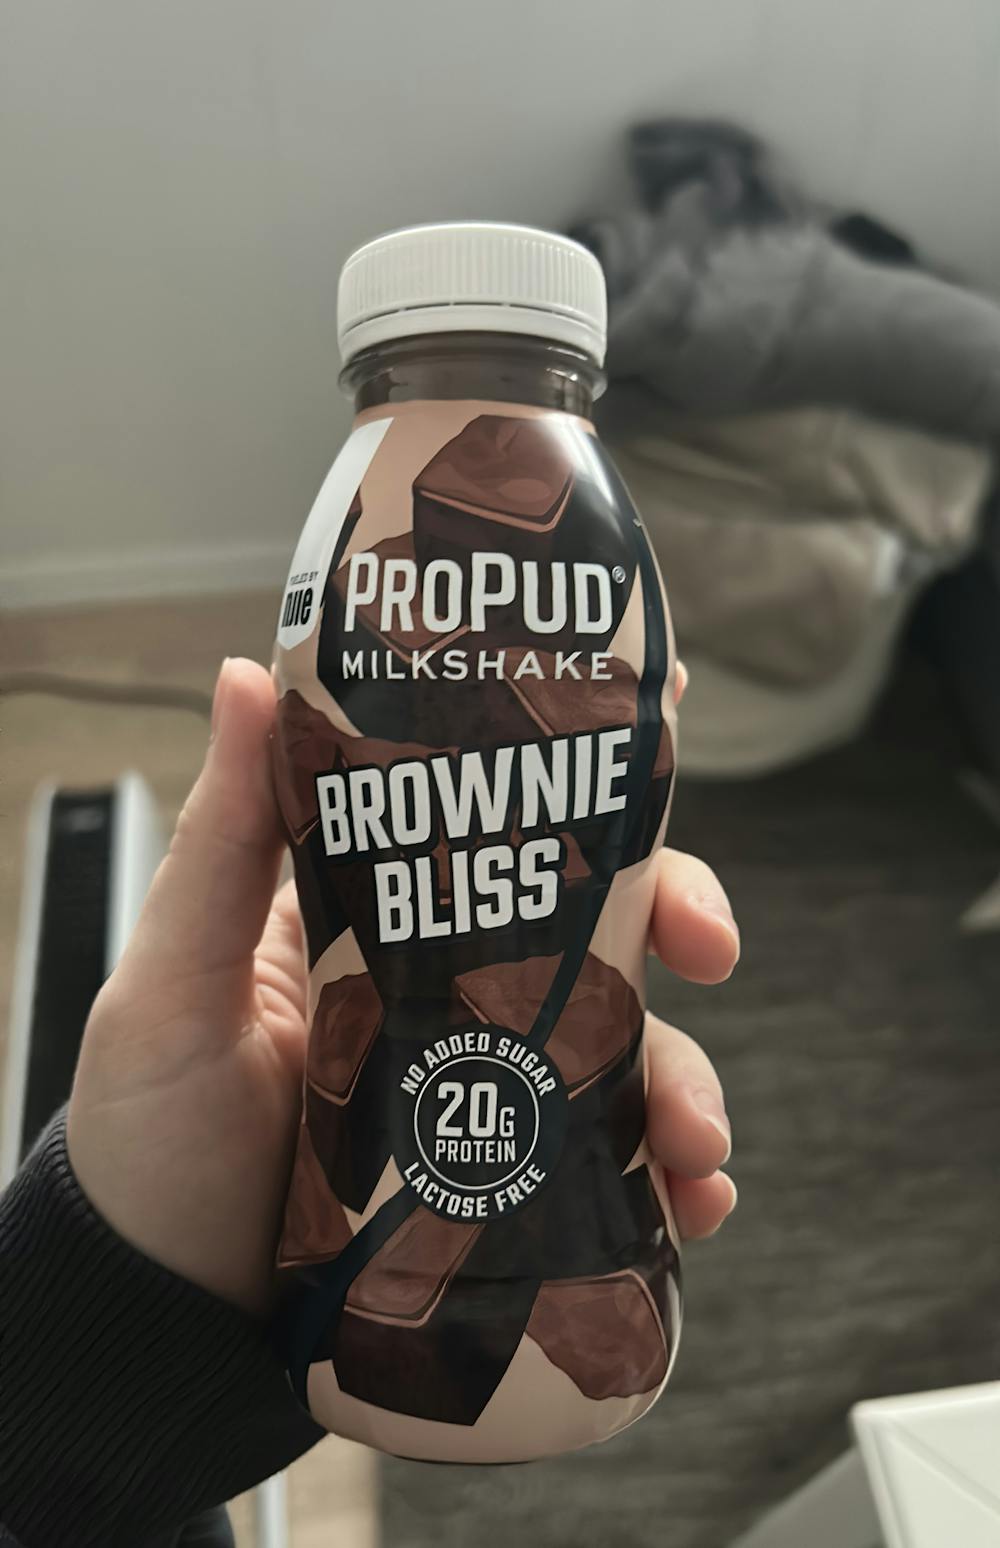 Propud milkshake, brownie bliss, Nije